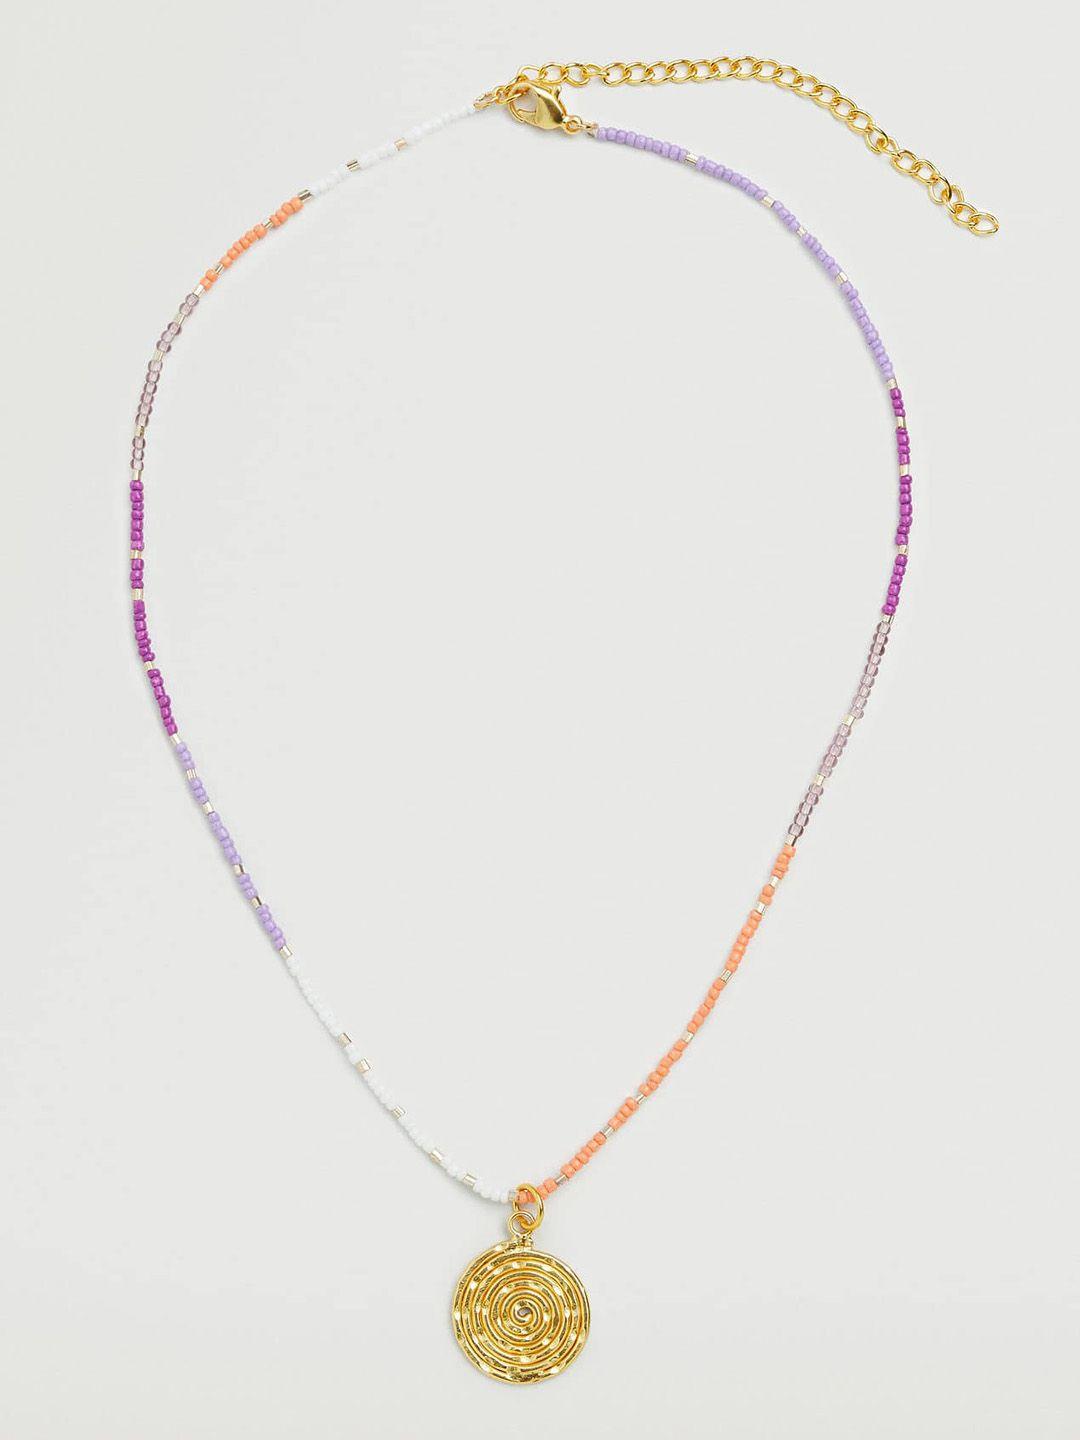 mango multicoloured beaded necklace with gold-toned pendant